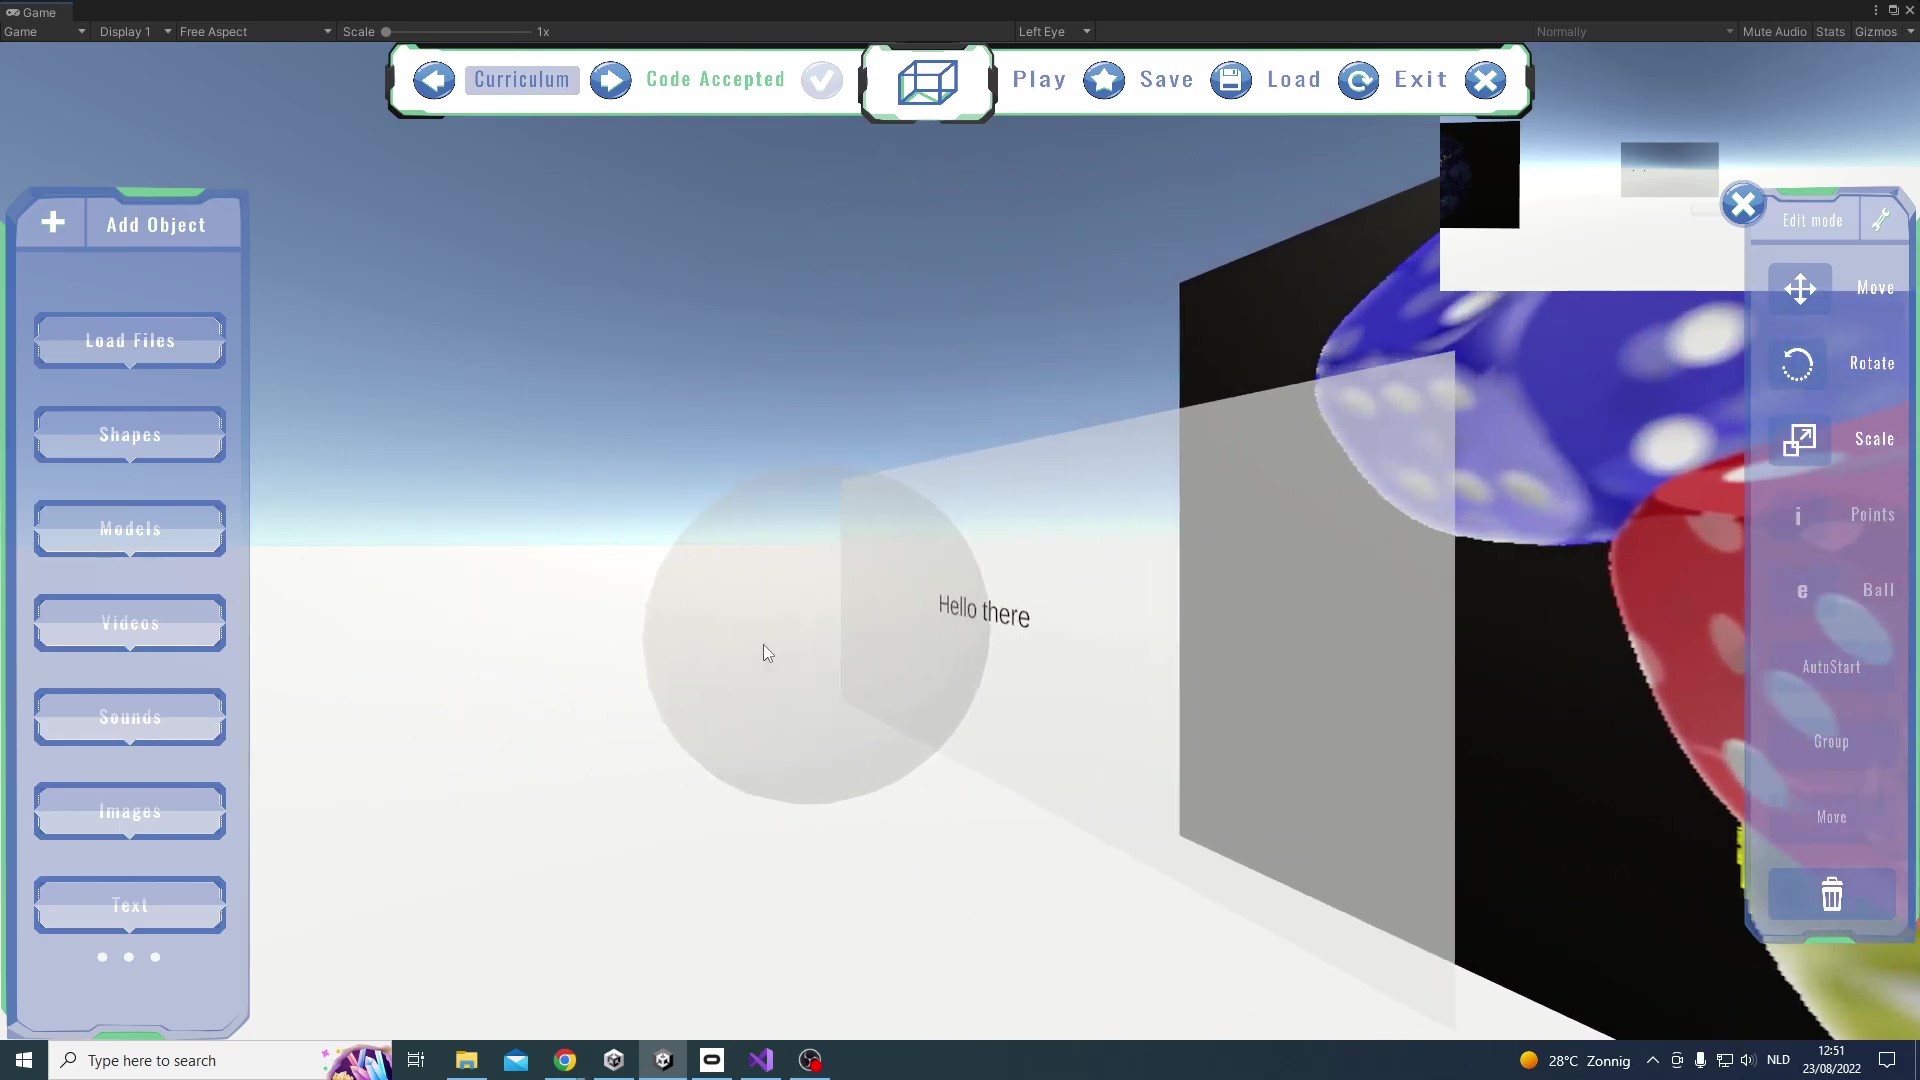 127 - VR PowerPoint screenshot2.jpg